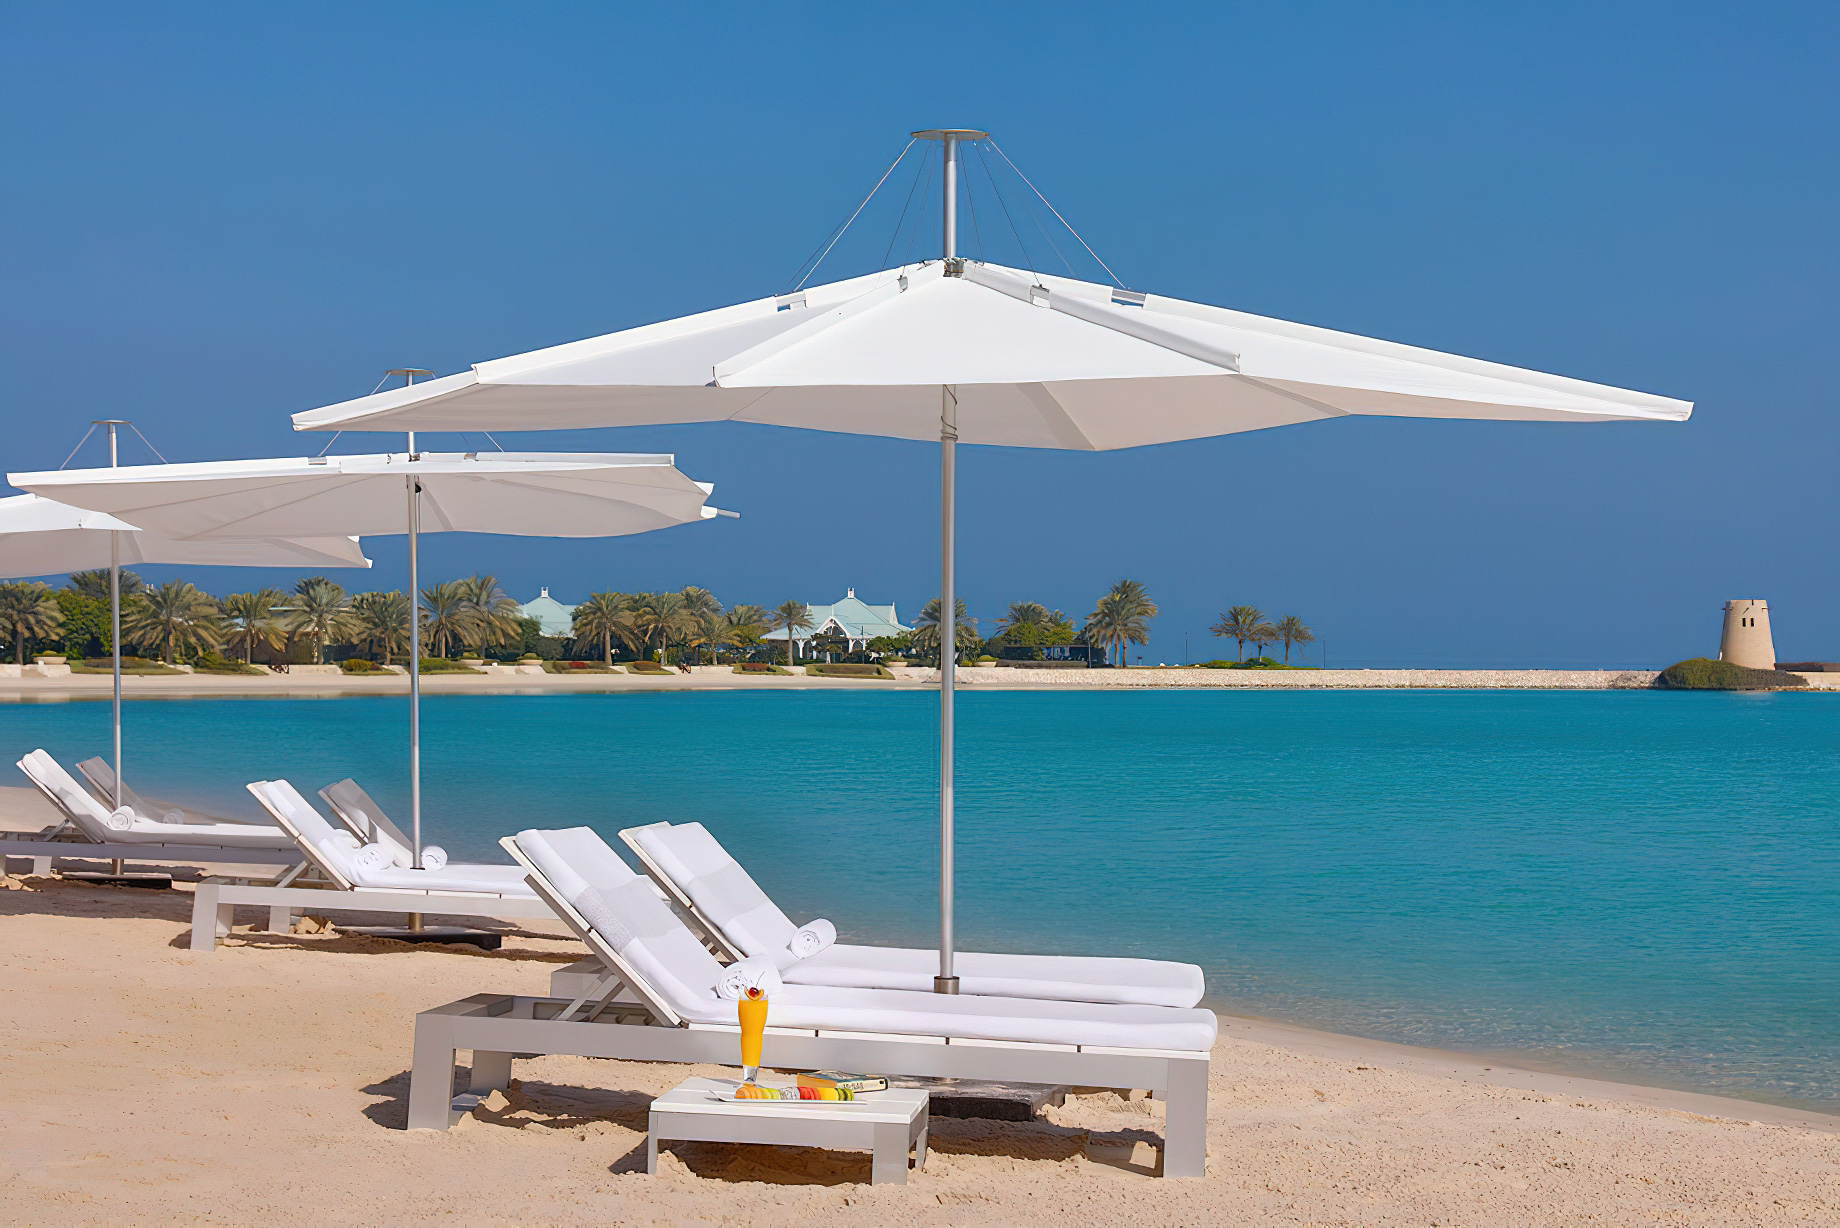 The Ritz-Carlton, Bahrain Resort Hotel – Manama, Bahrain – The Royal Beach Club